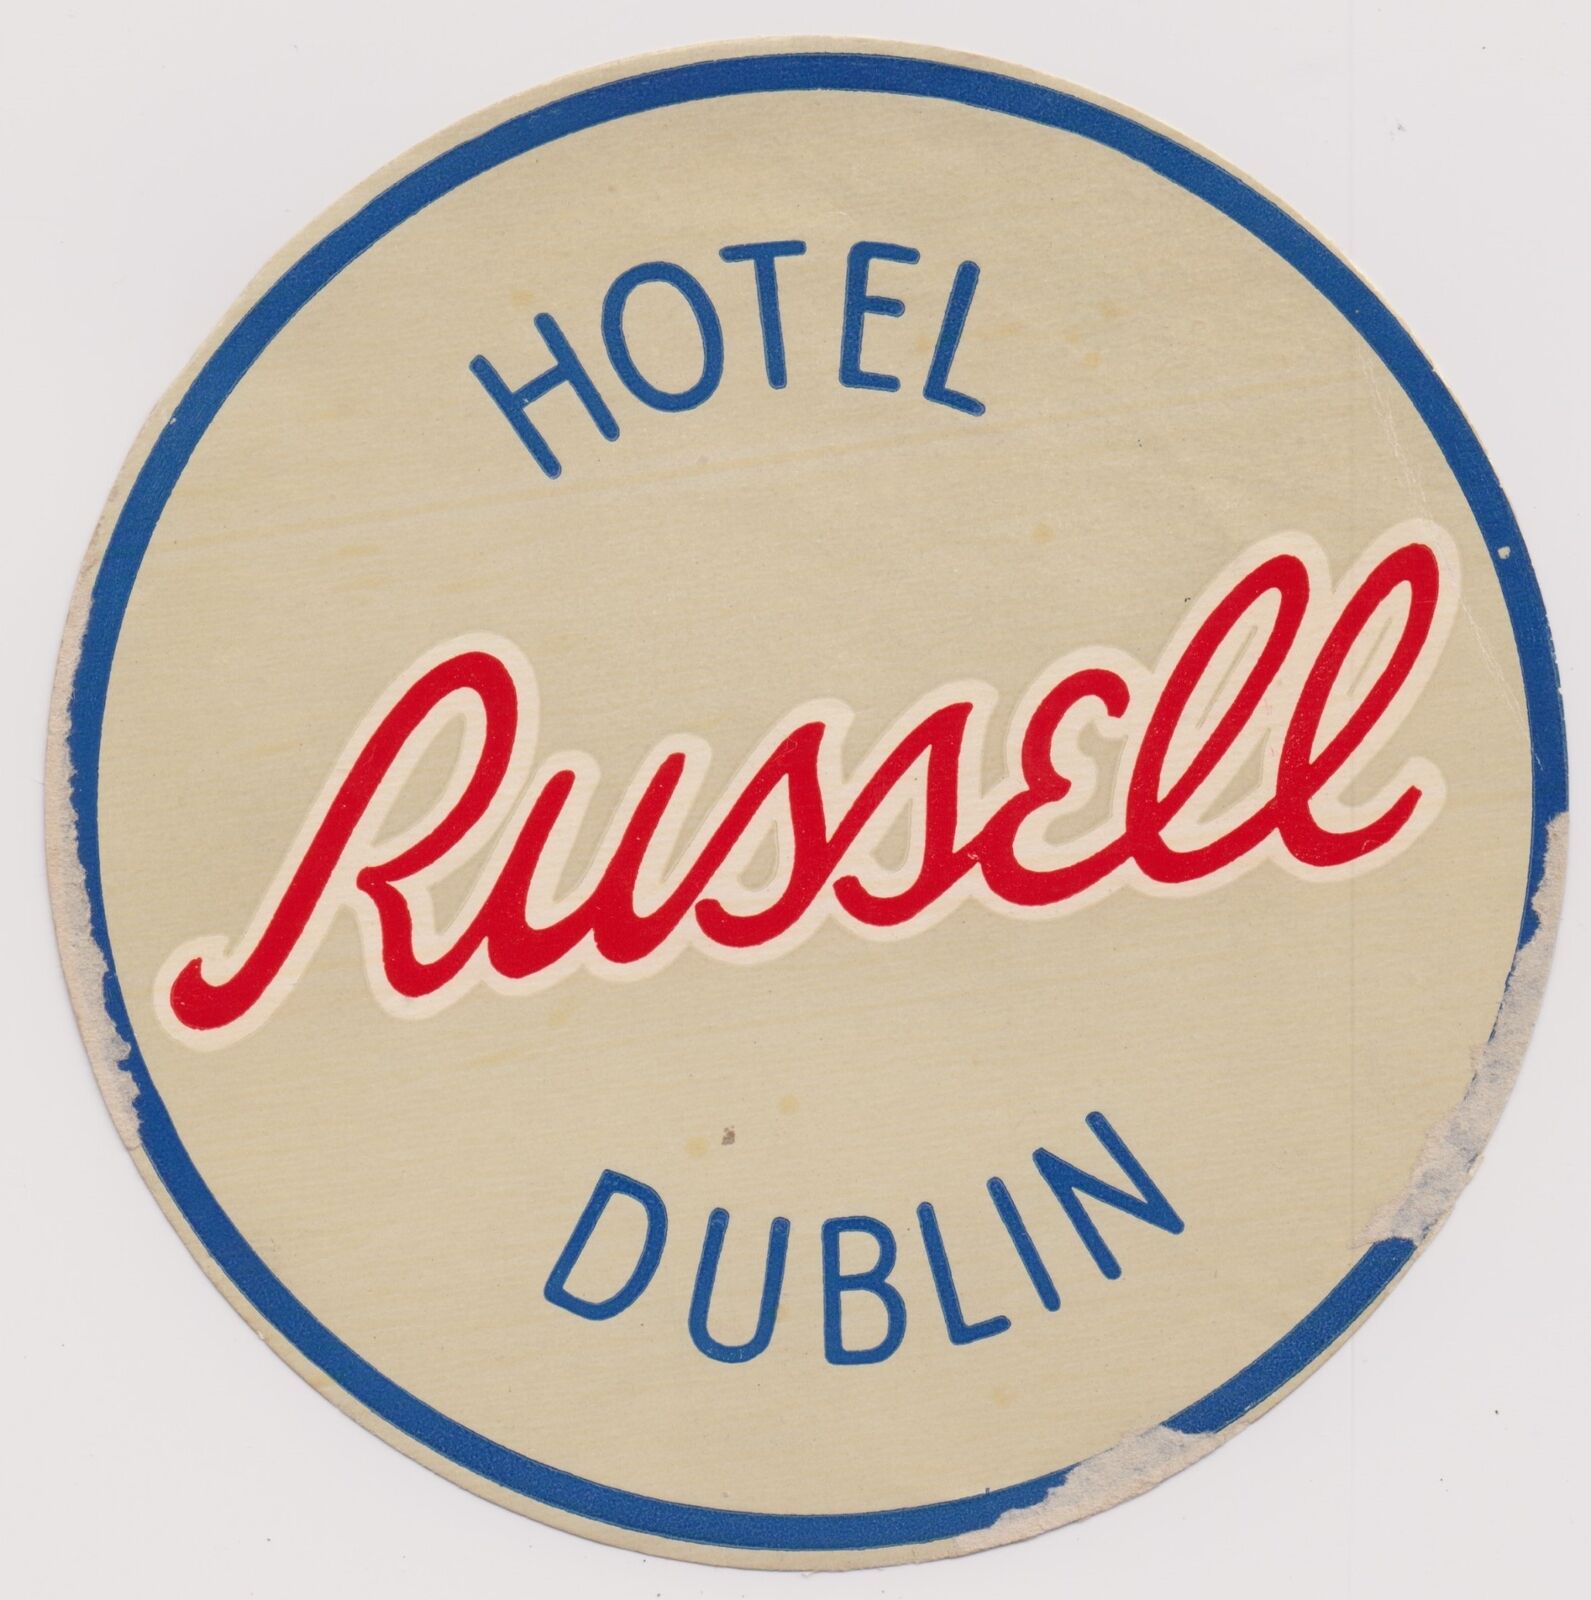 Hotel Russell Dublin Ireland  Luggage Label 